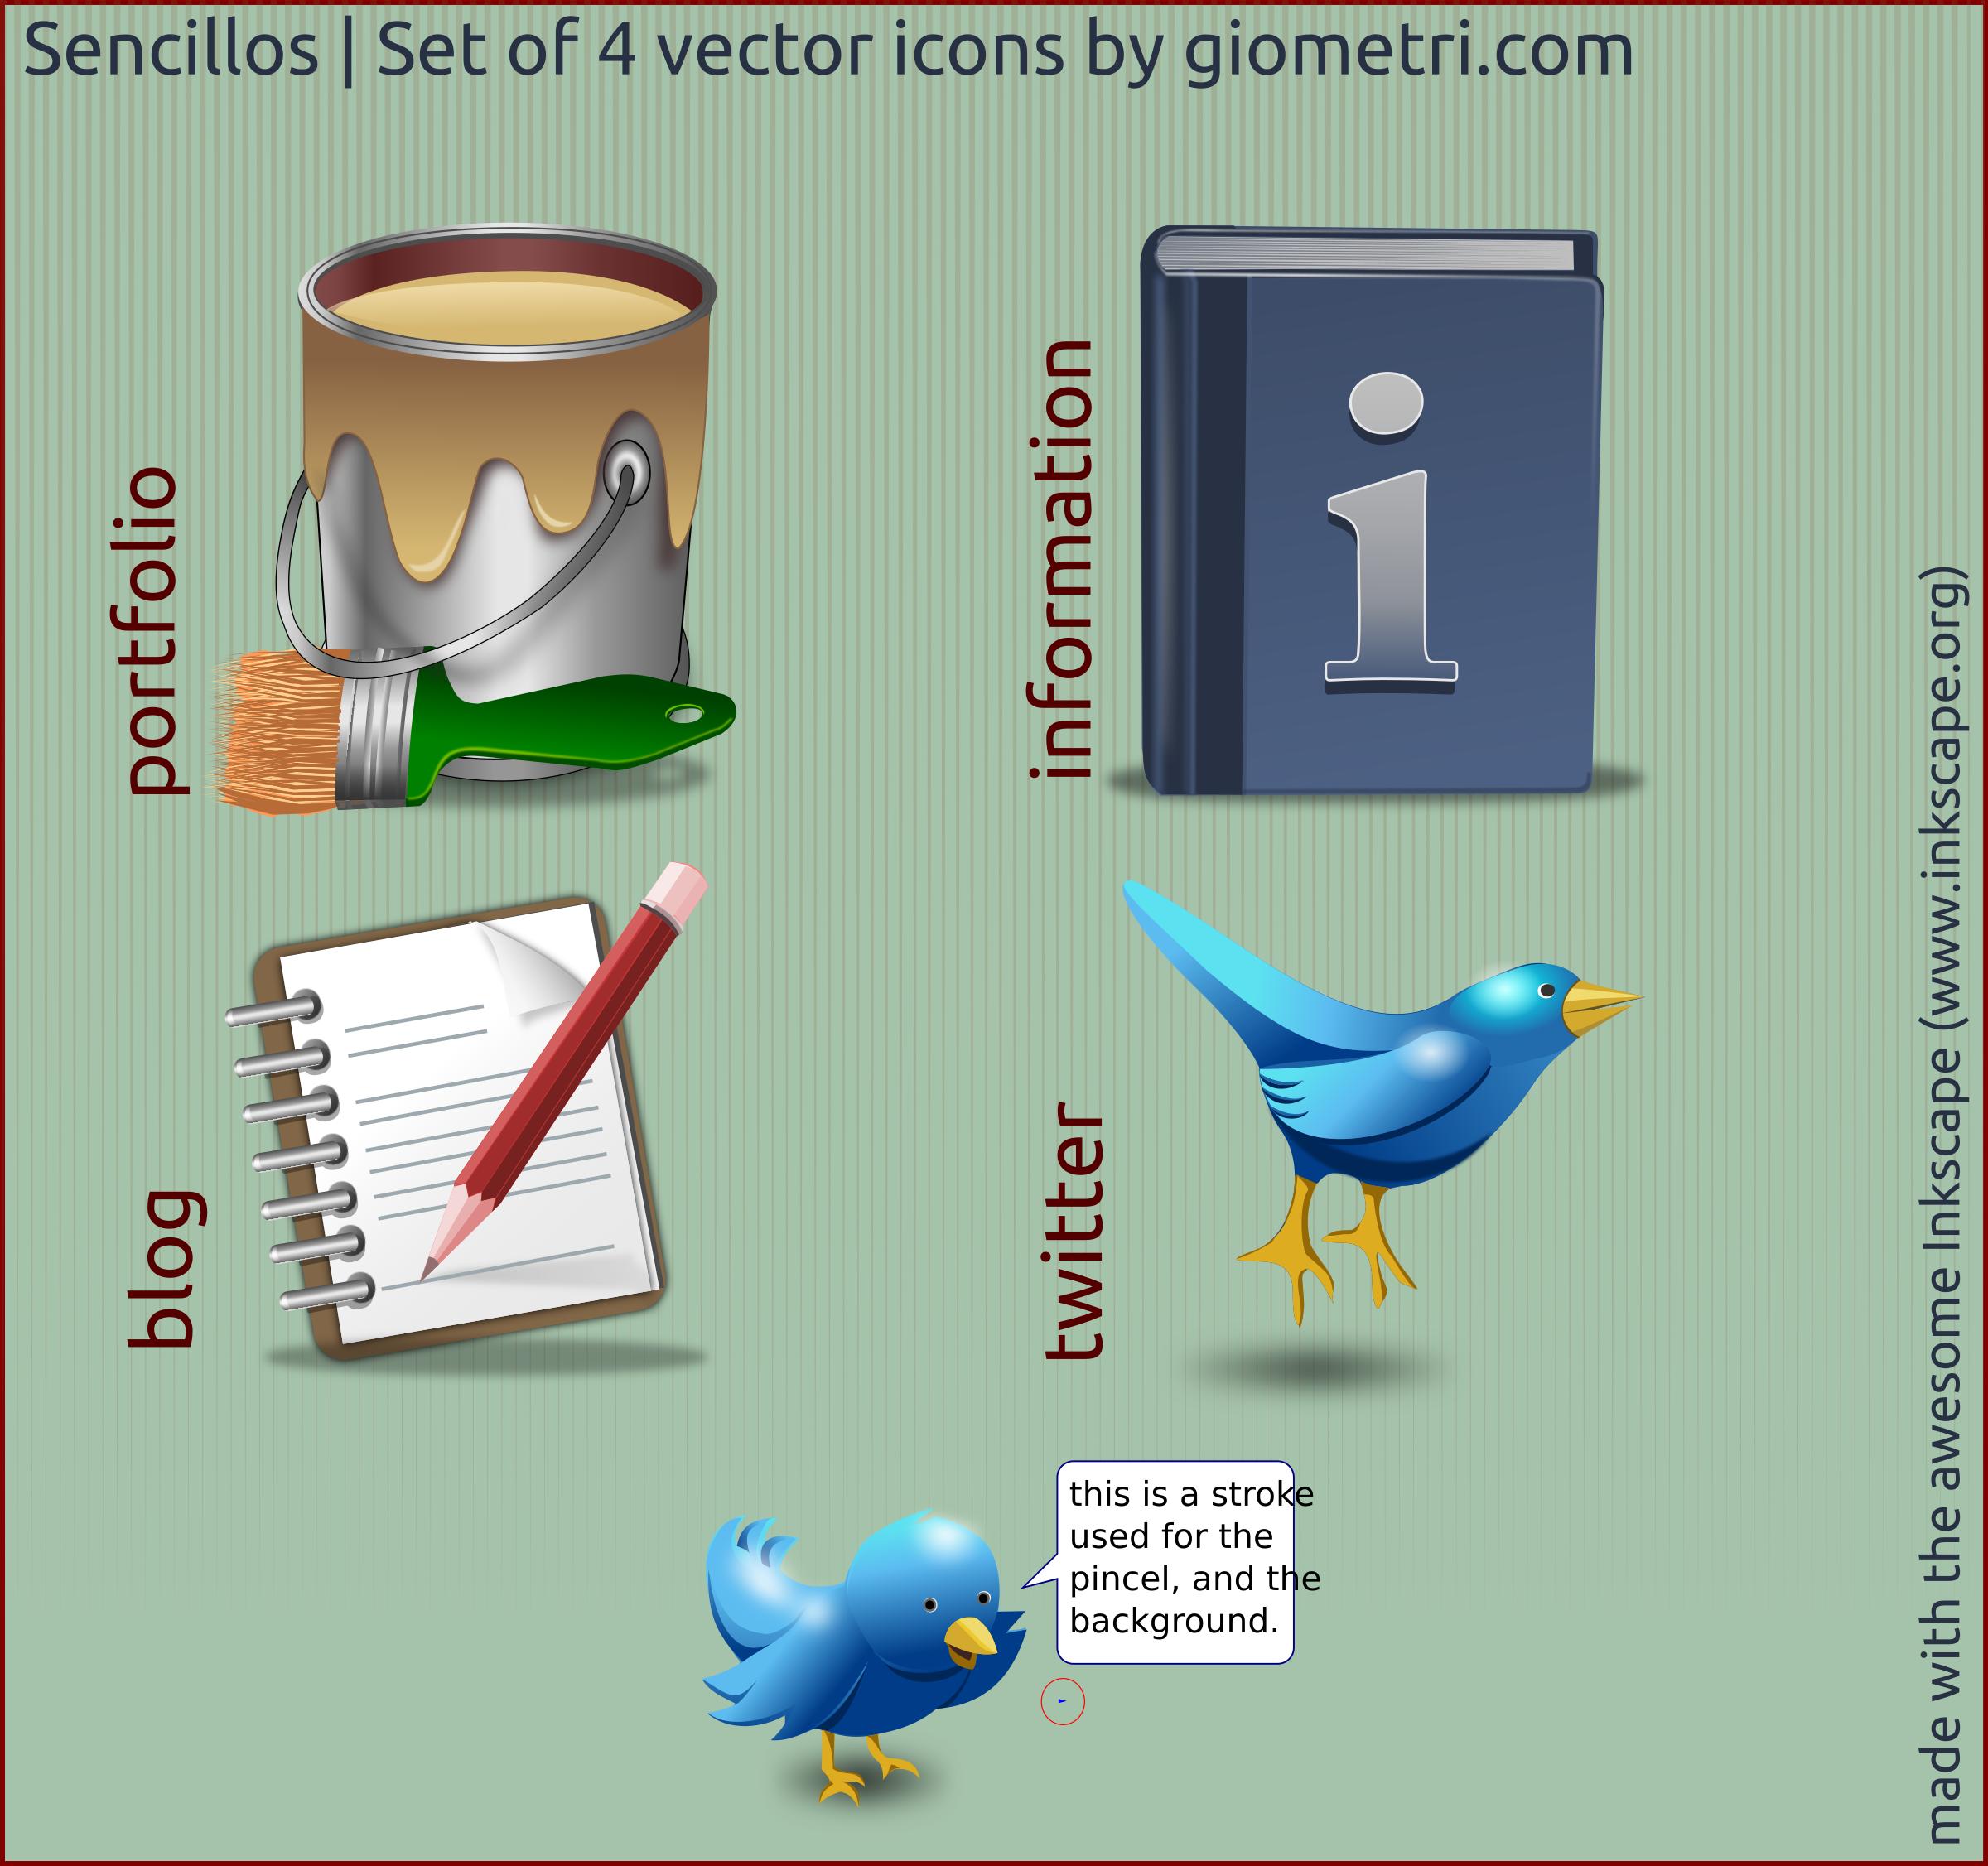 Sencillo 4 vector icons PNG icons